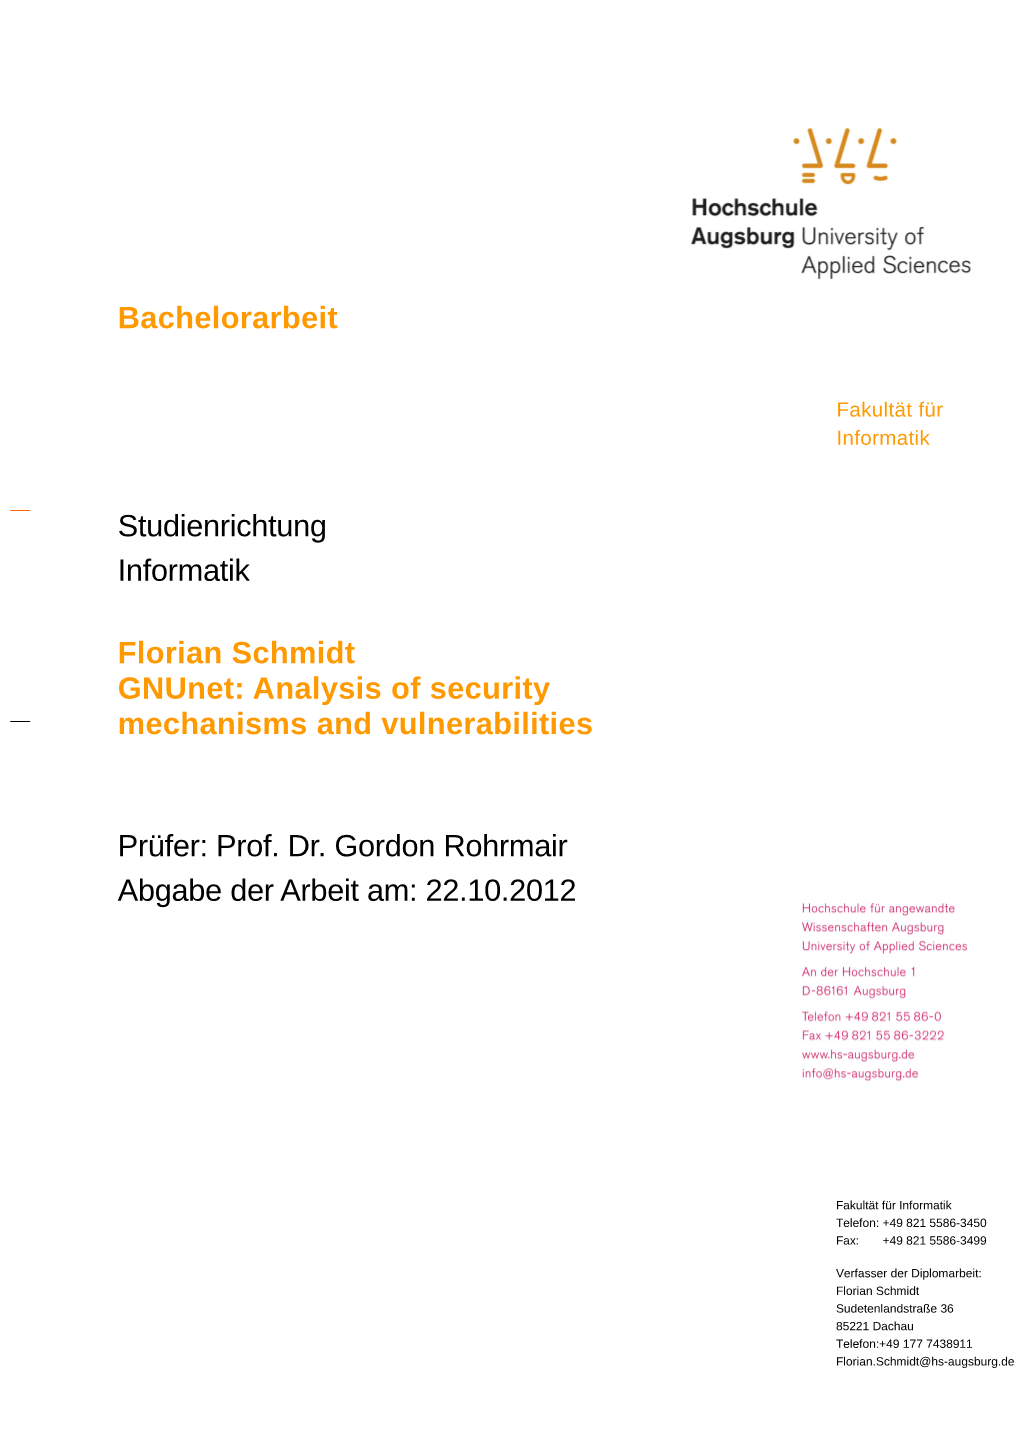 Gnunet: Analysis of Security Mechanisms and Vulnerabilities